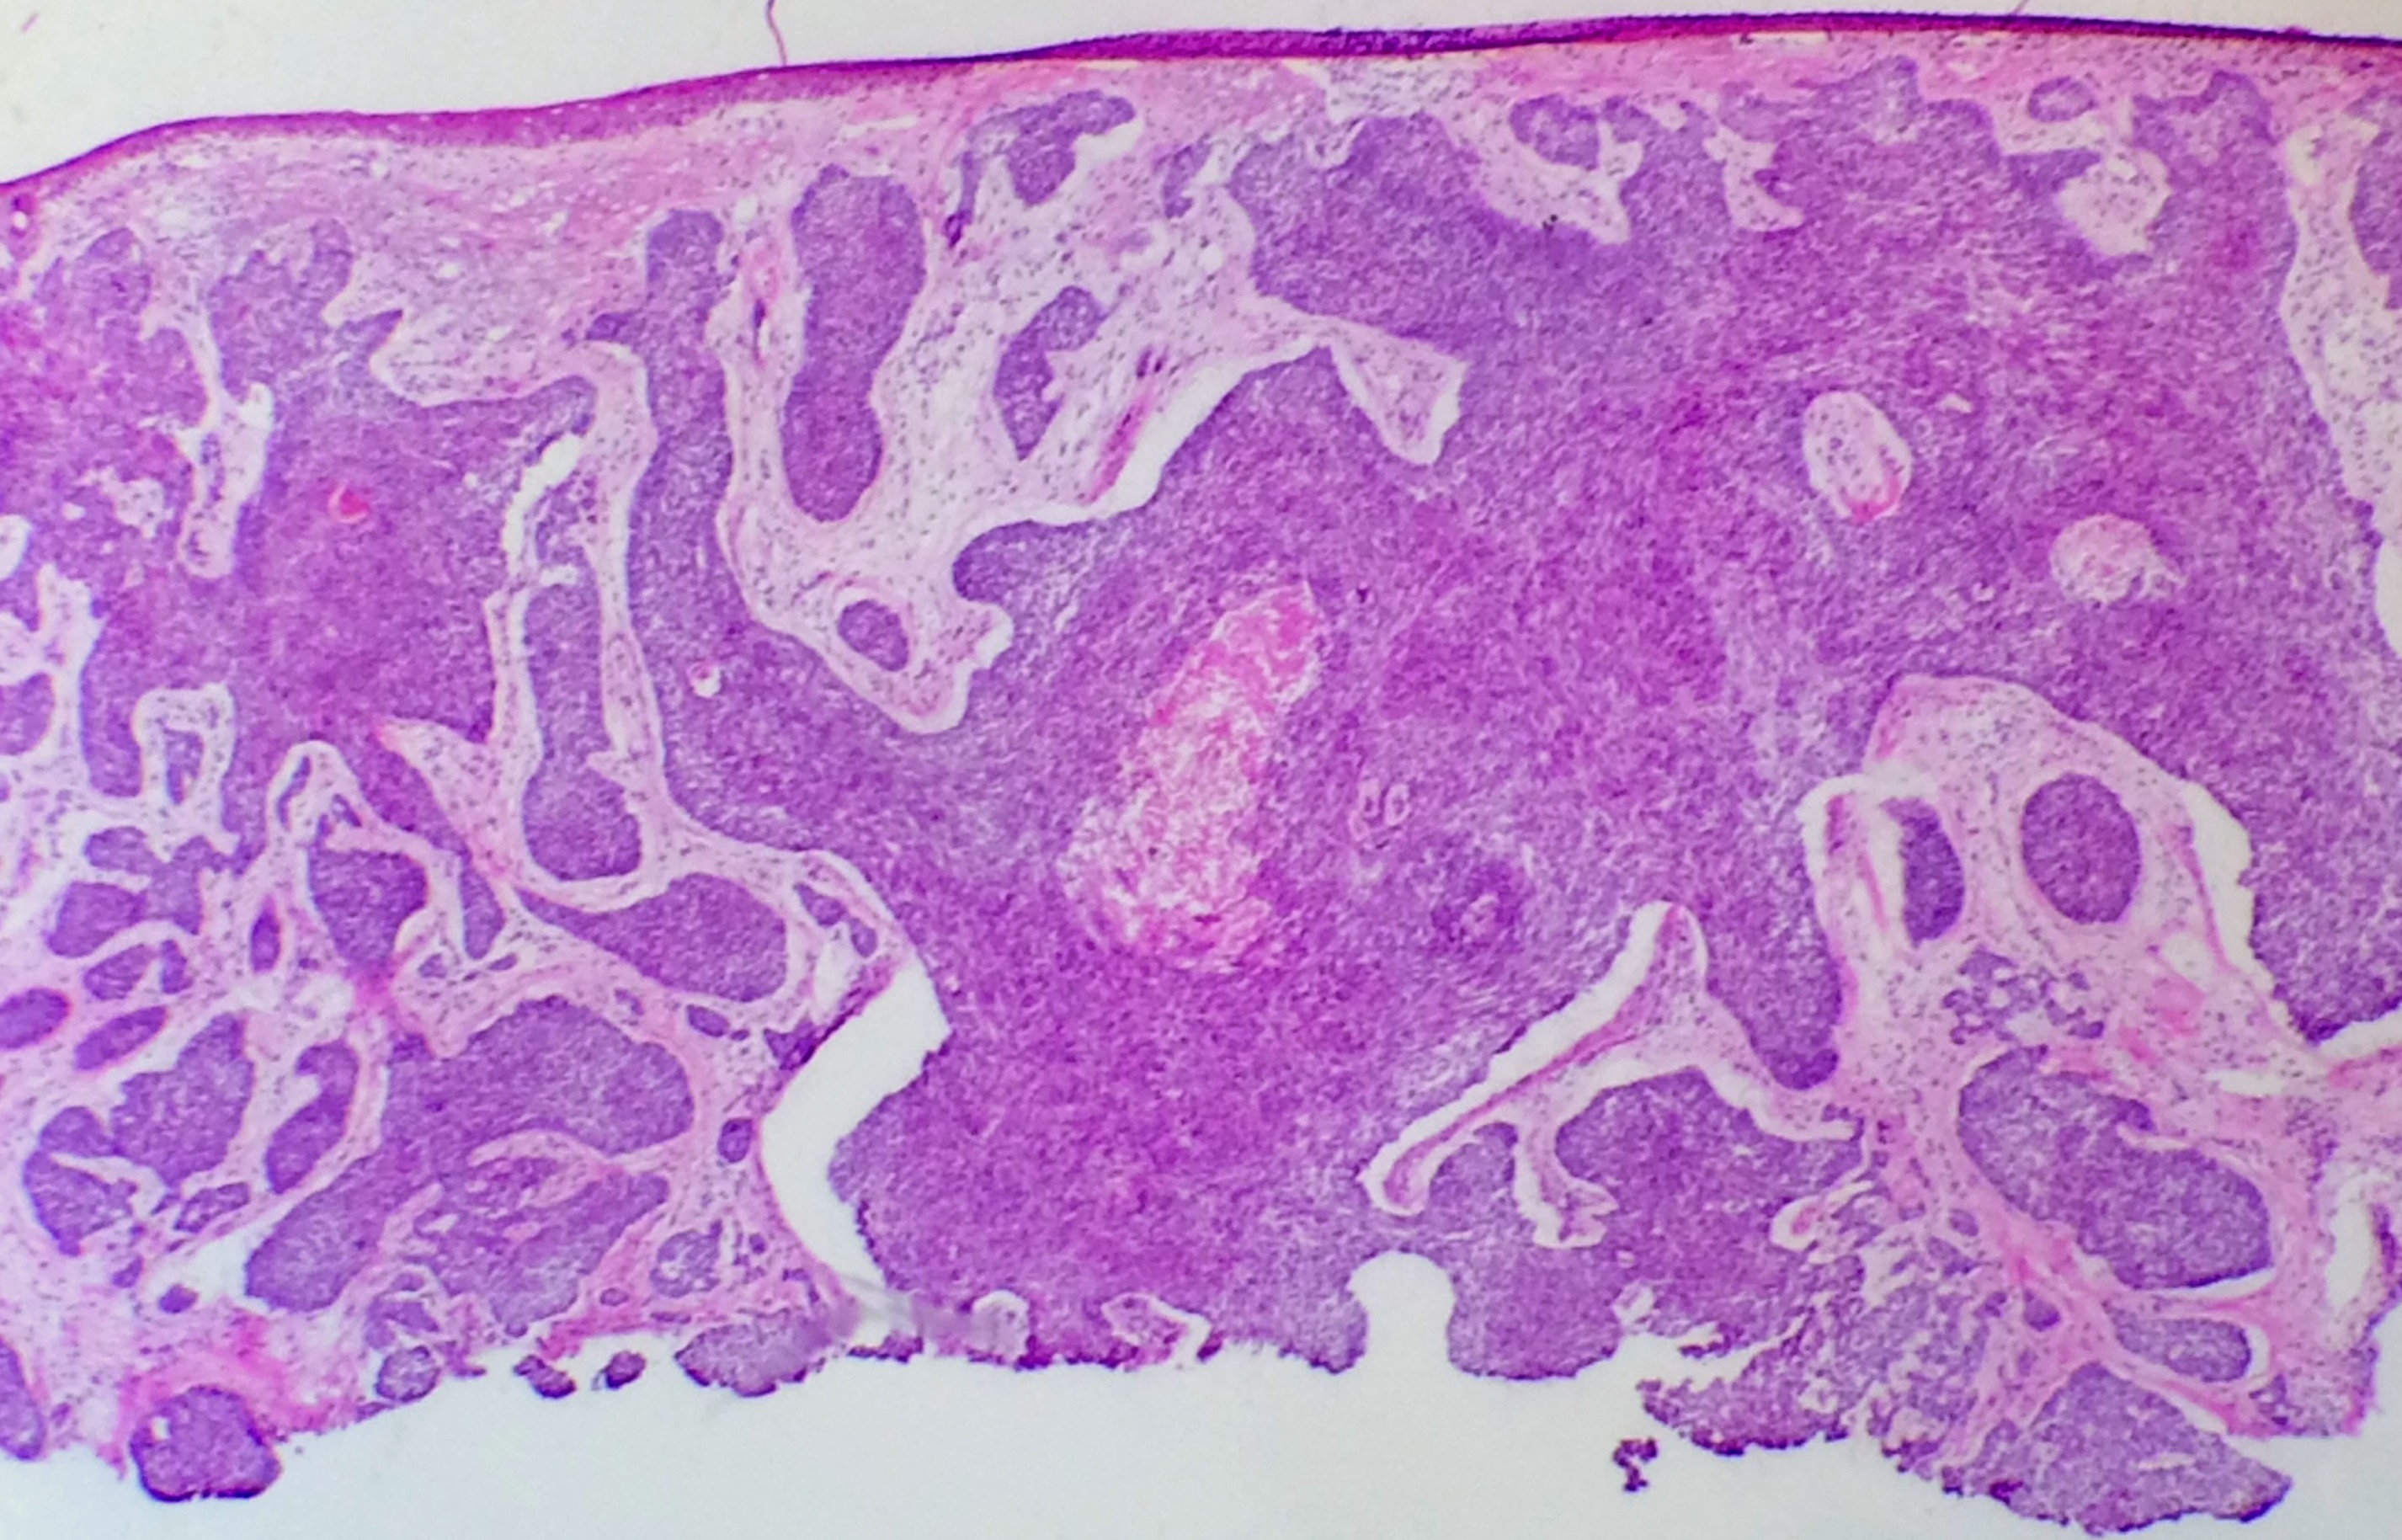 Carcinoma Basocelular em material de cirurgia micrográfica de Mohs. Debulking. Notar os blocos de células basaloides com fenda do estroma.